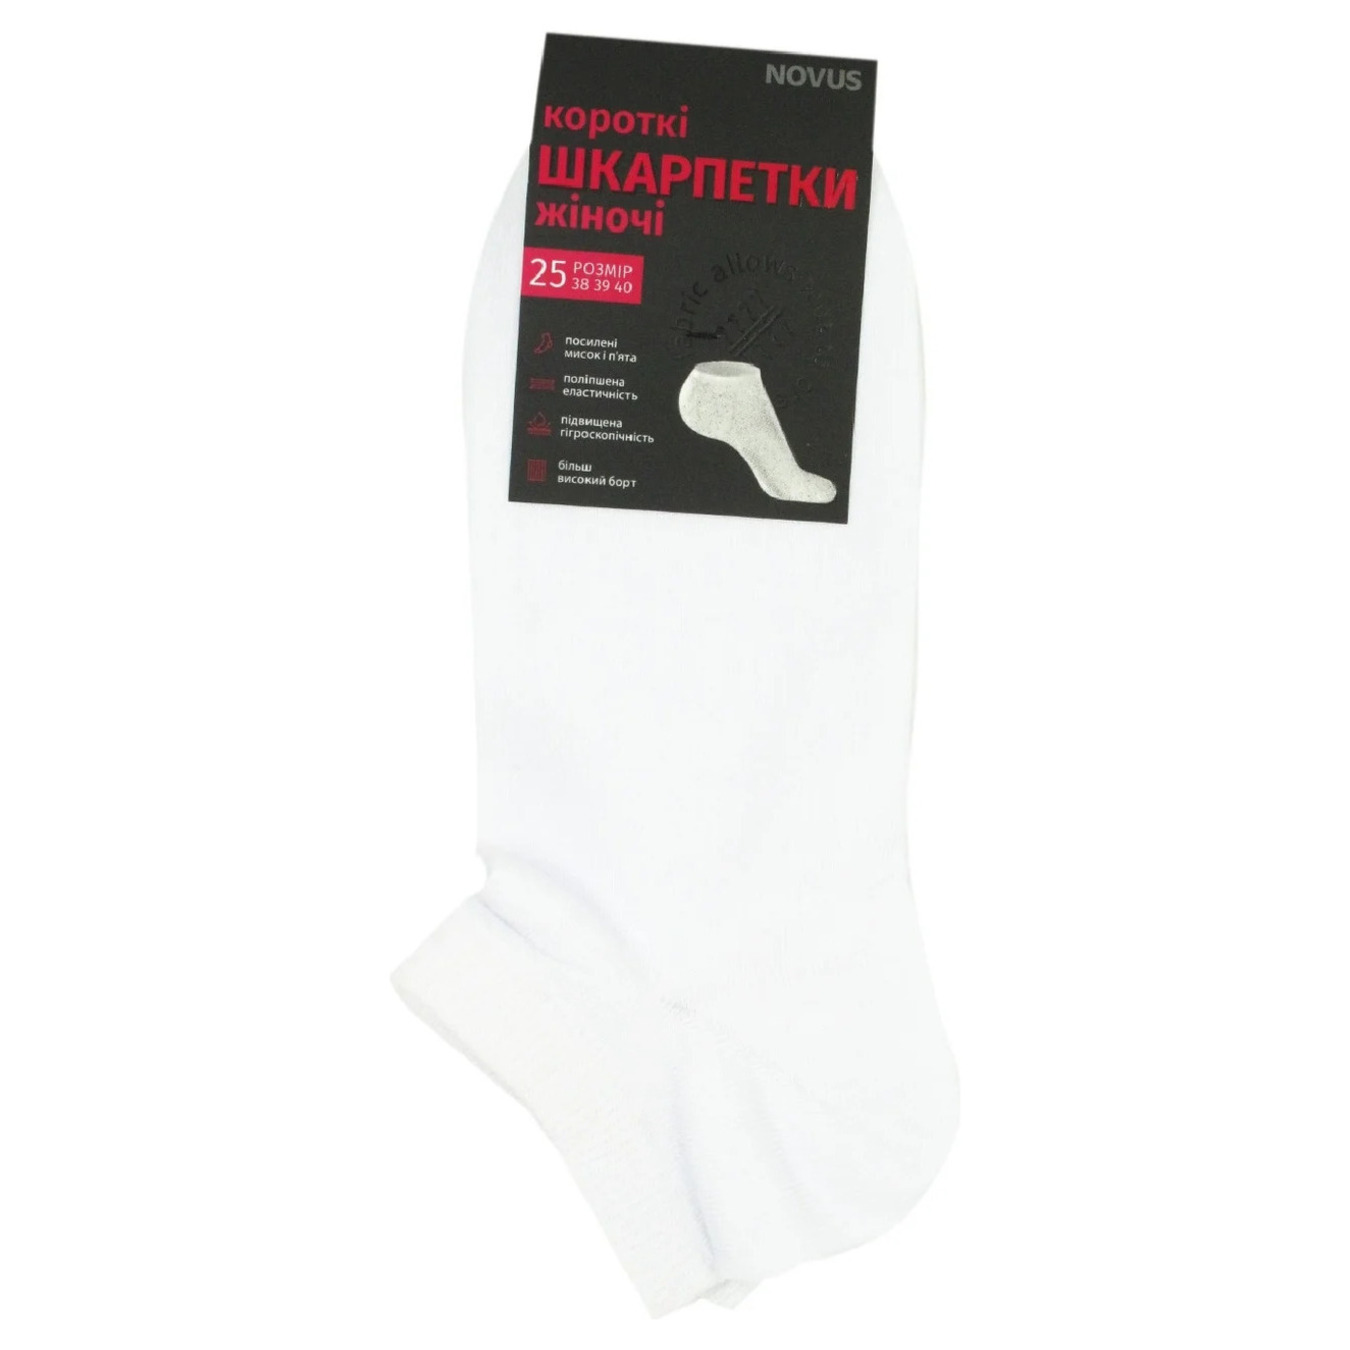 Women's socks NOVUS demi-season short white size 25